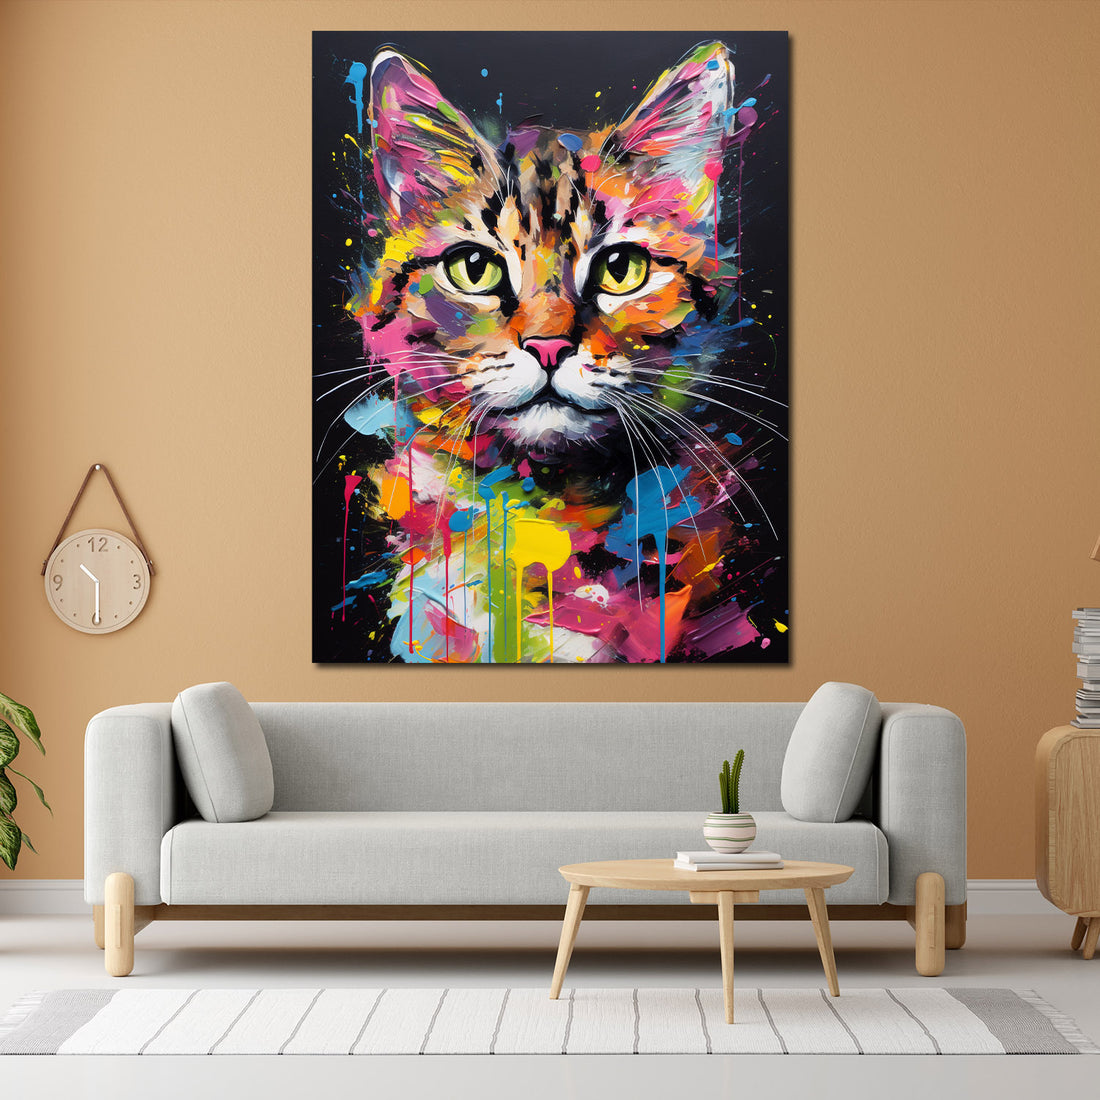 Wandbild wunderschön mit Katze Colour Style